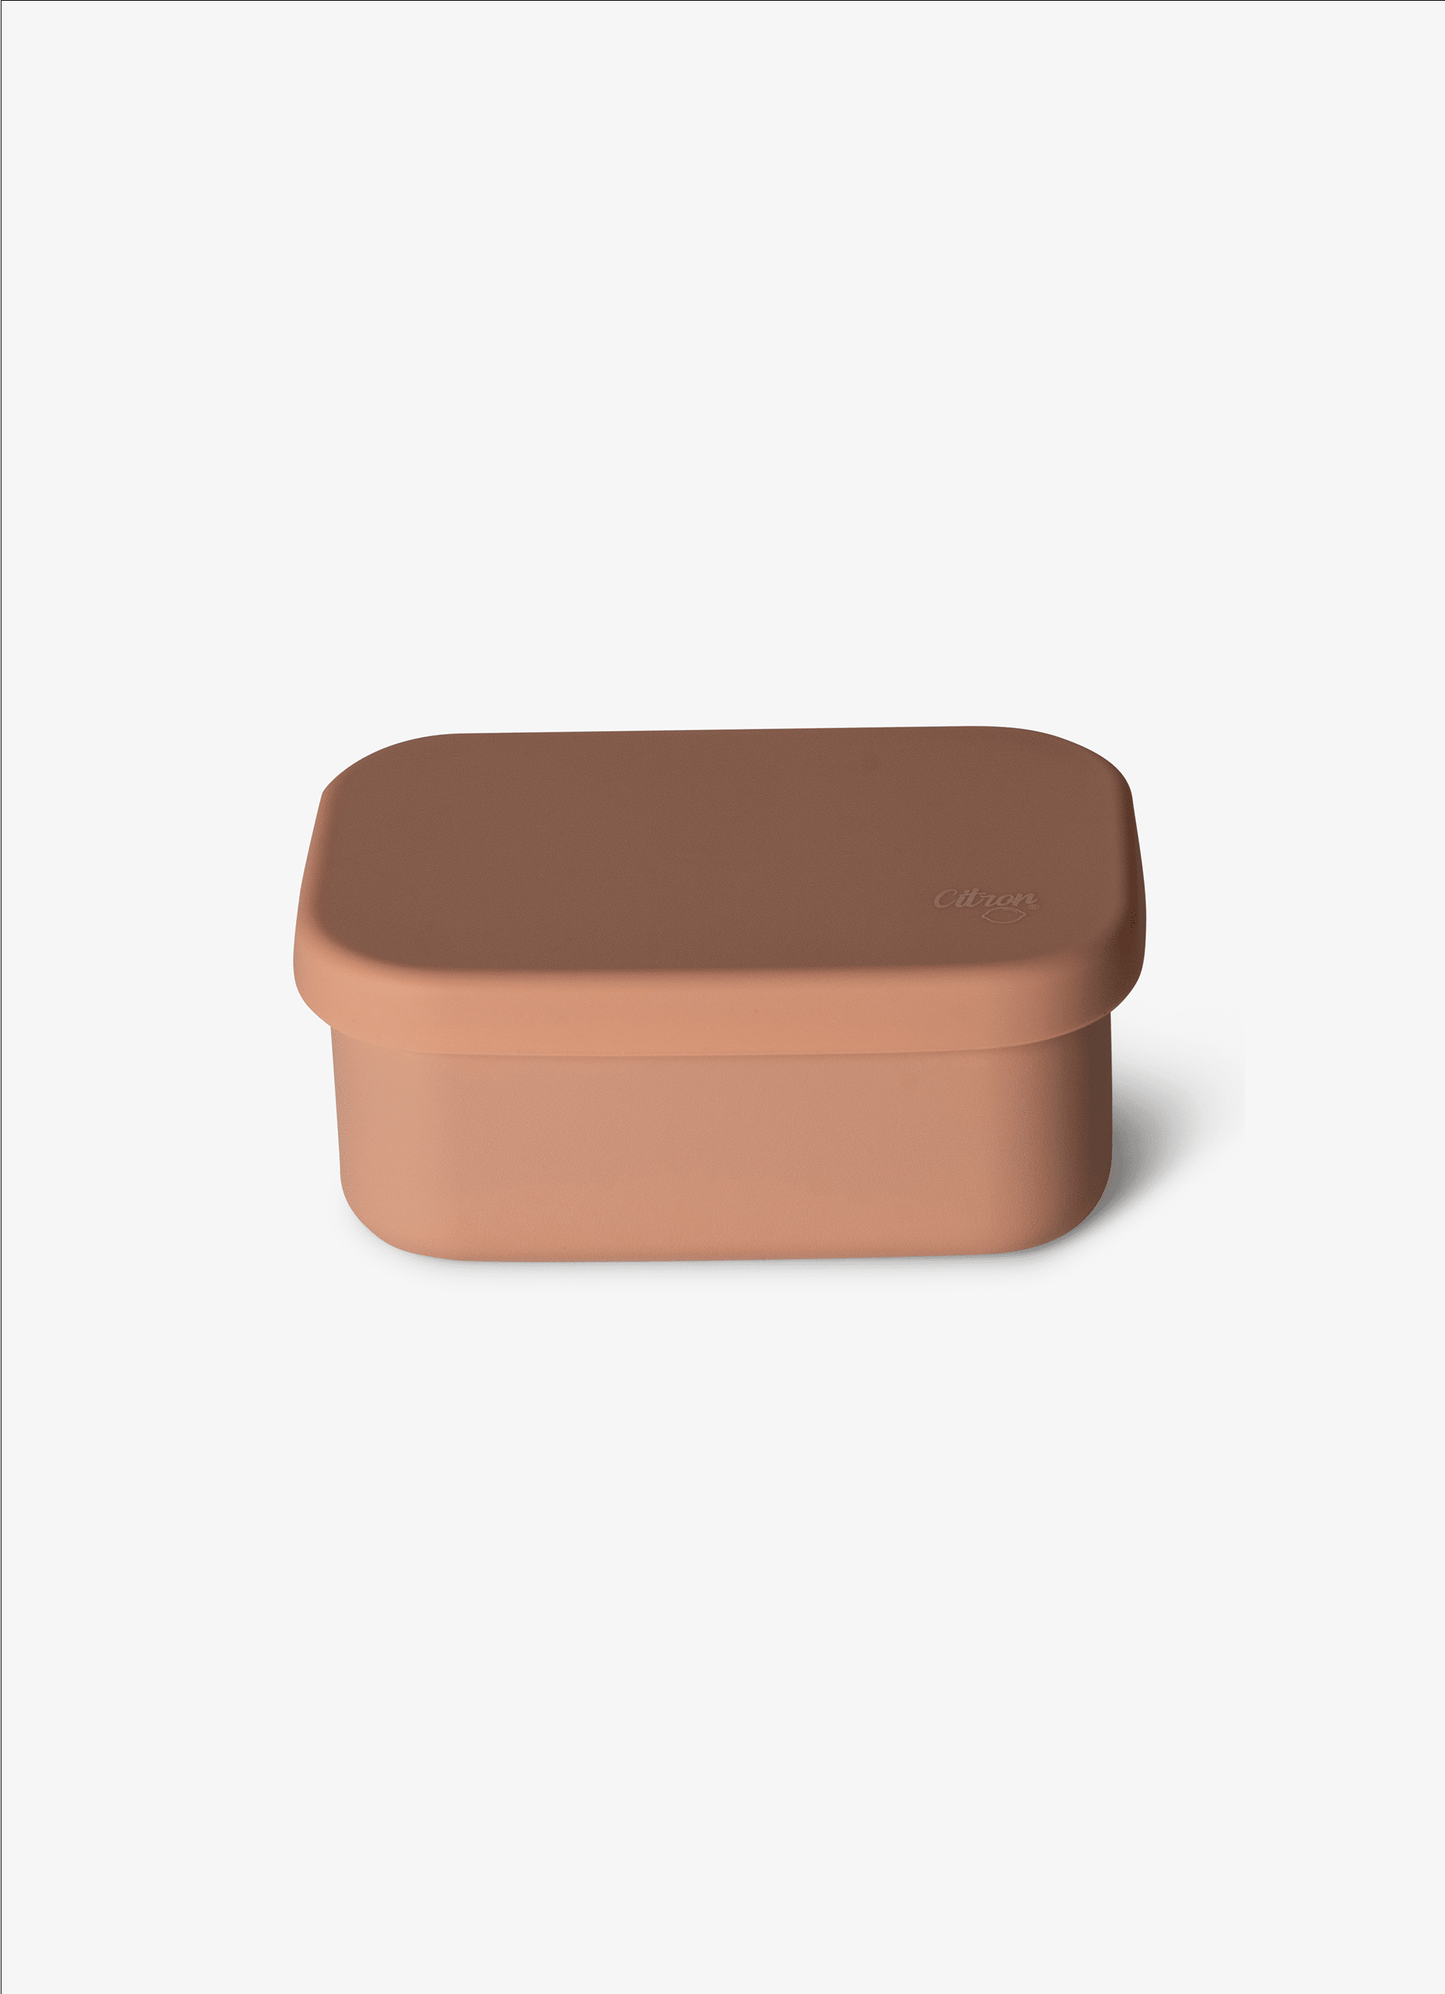 Mini Stainless Steel snack box - Blush Pink